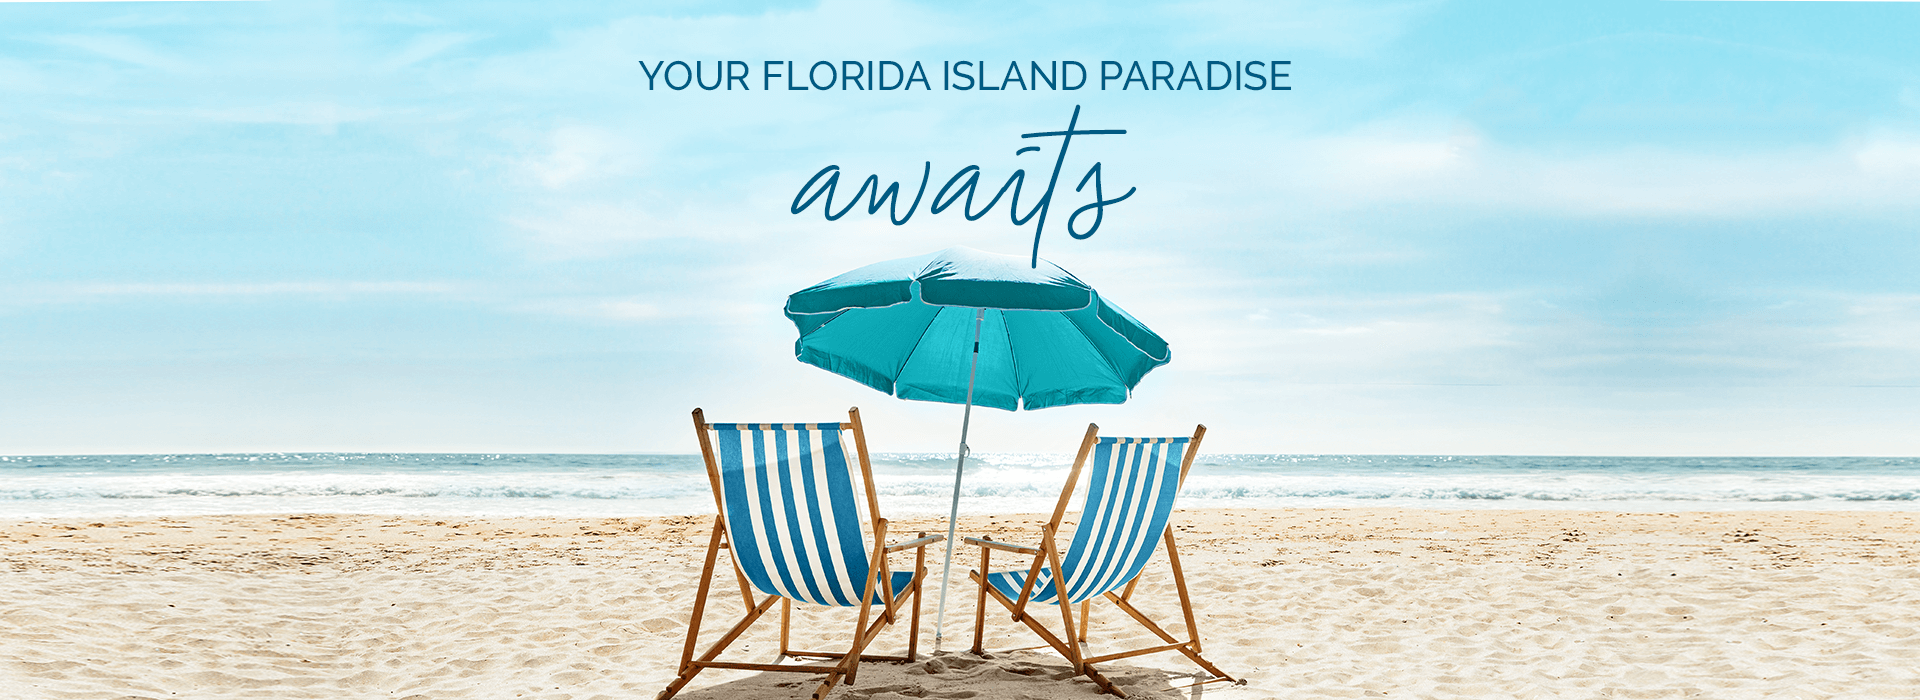 Your Florida Island Paradise Awaits